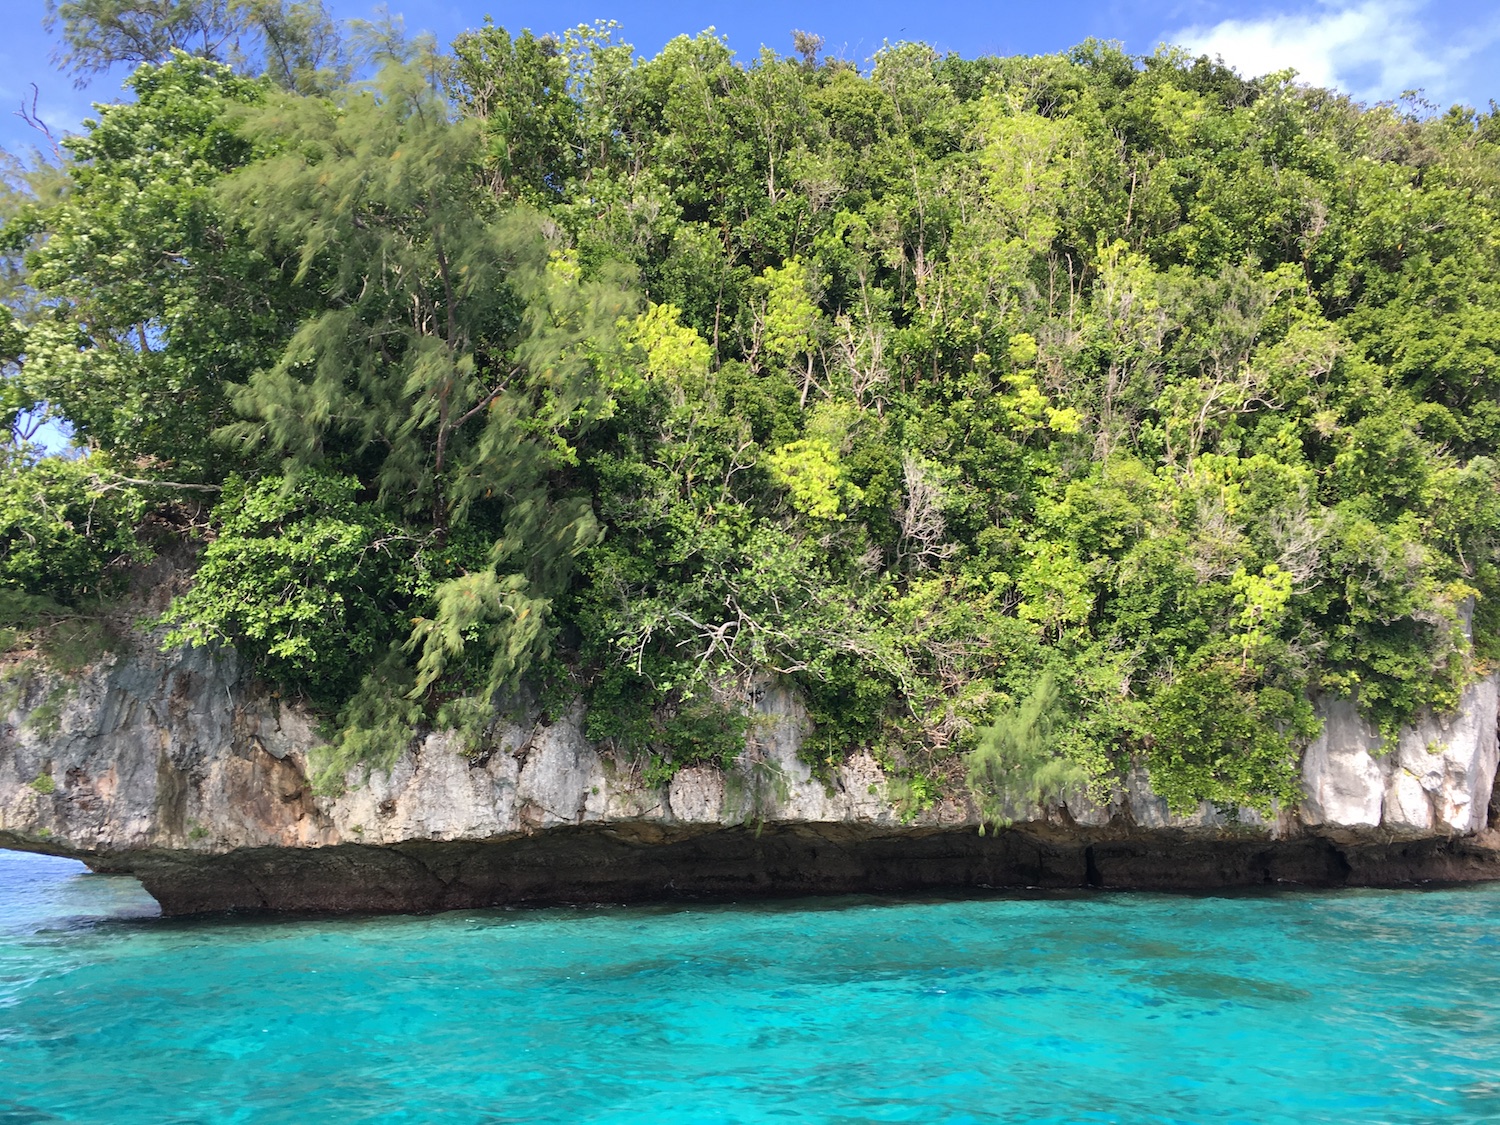 Close up of a Rock Island in Palau